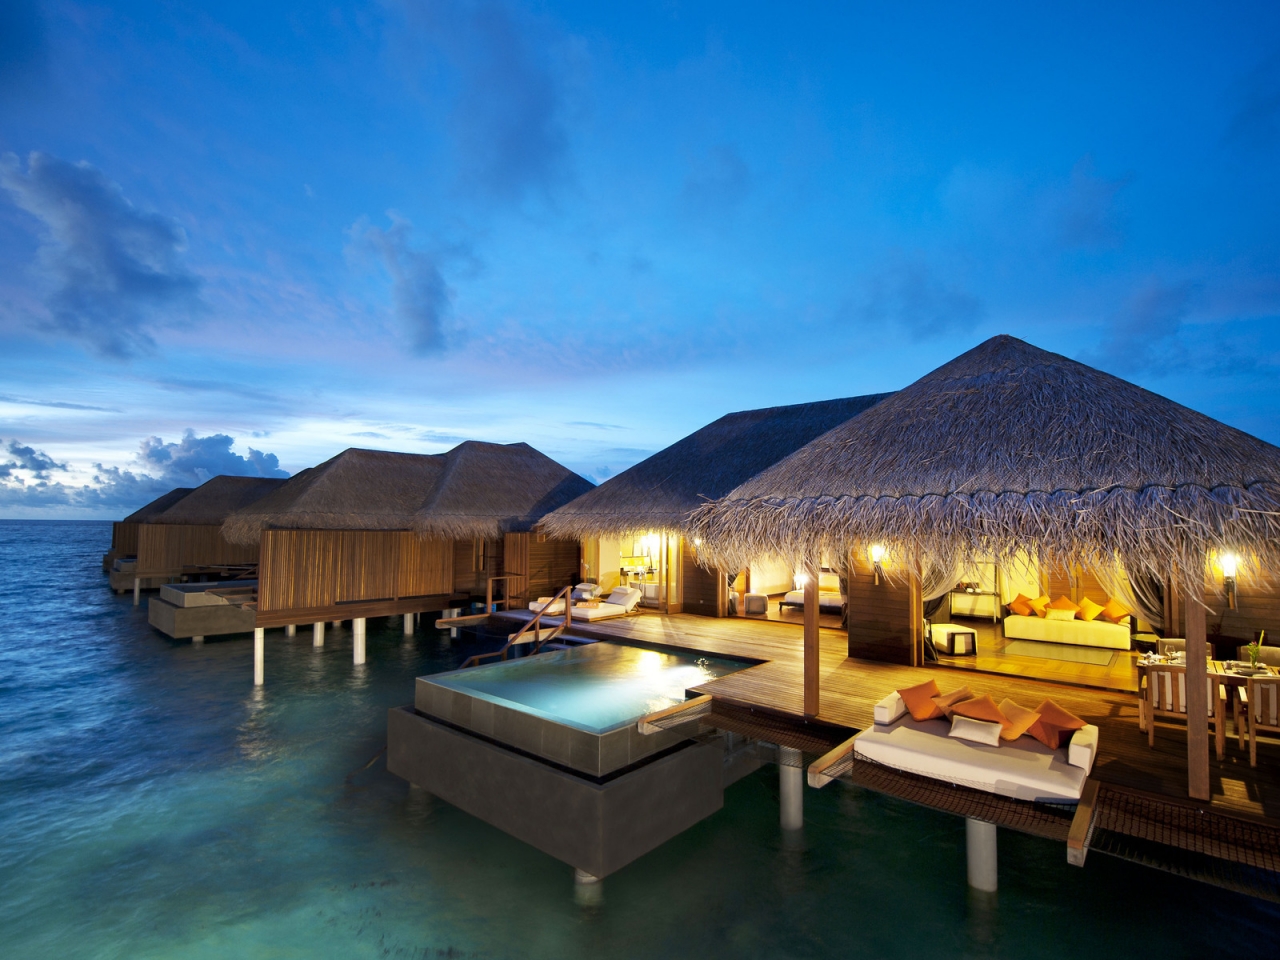 Maldives Ayada Hotel for 1280 x 960 resolution